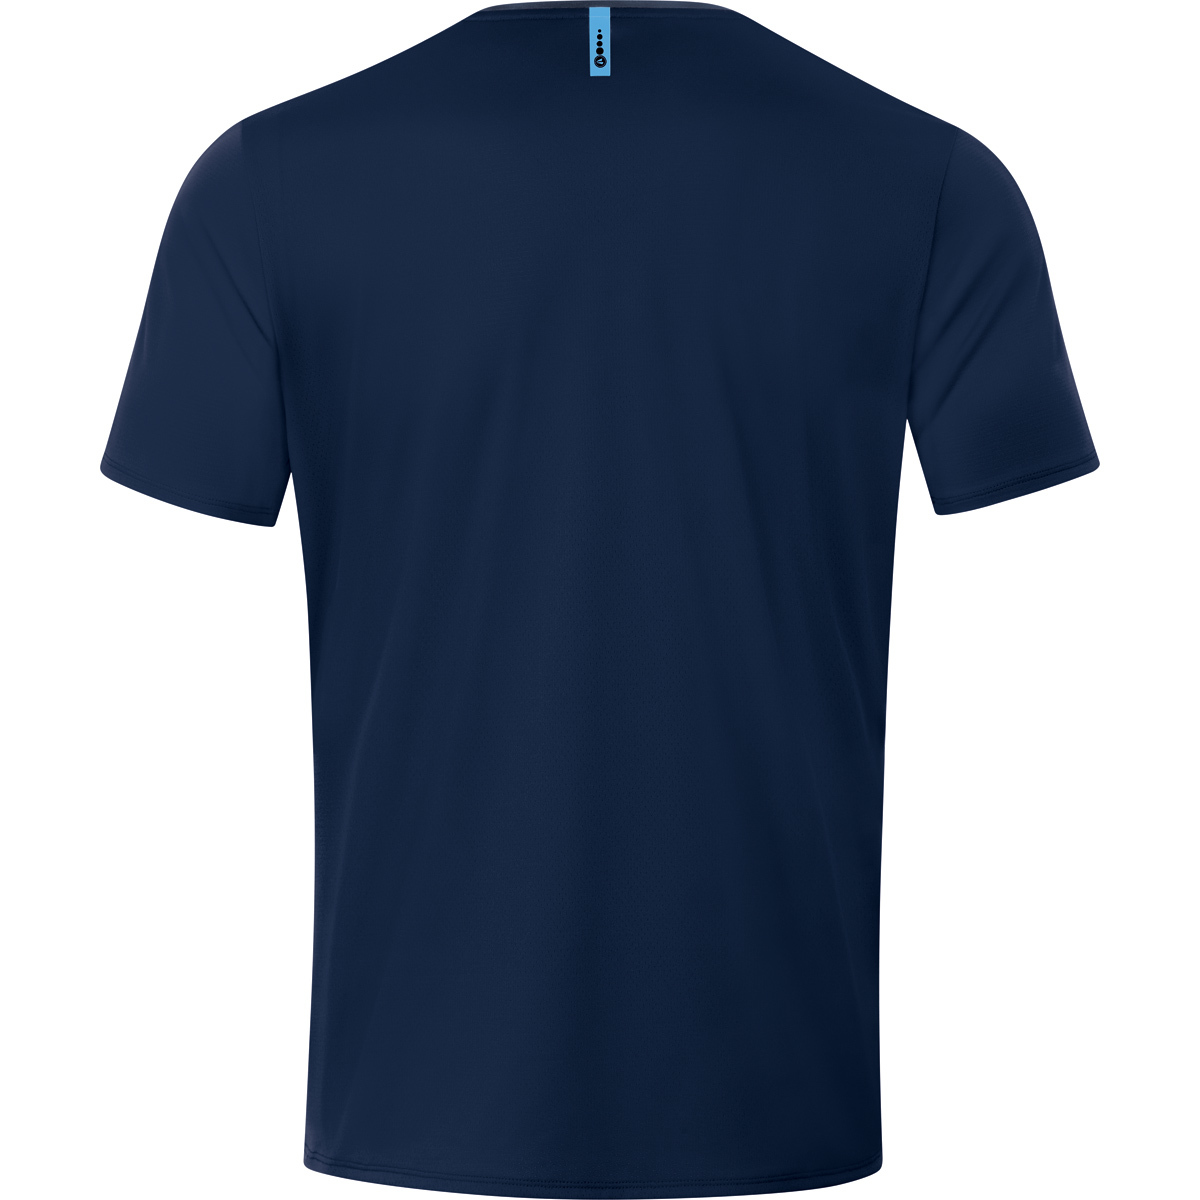 Herren, JAKO marine/darkblue/skyblue, XXL, 6120 Gr. Champ 2.0 T-Shirt